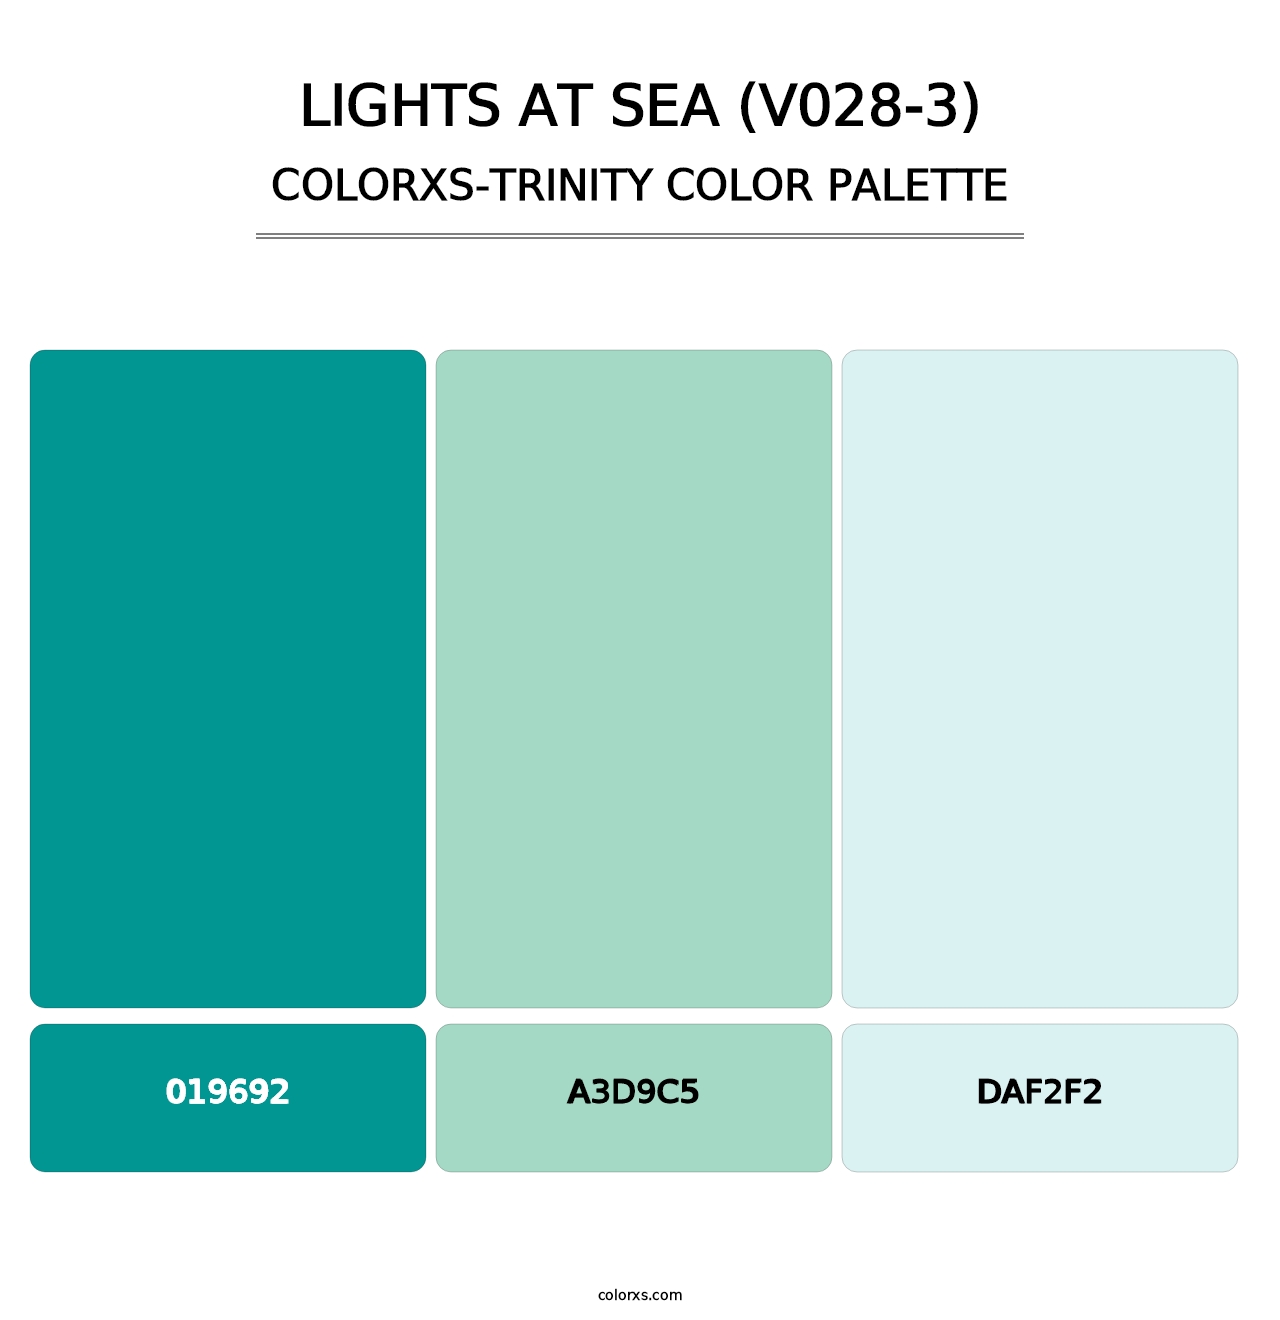 Lights at Sea (V028-3) - Colorxs Trinity Palette